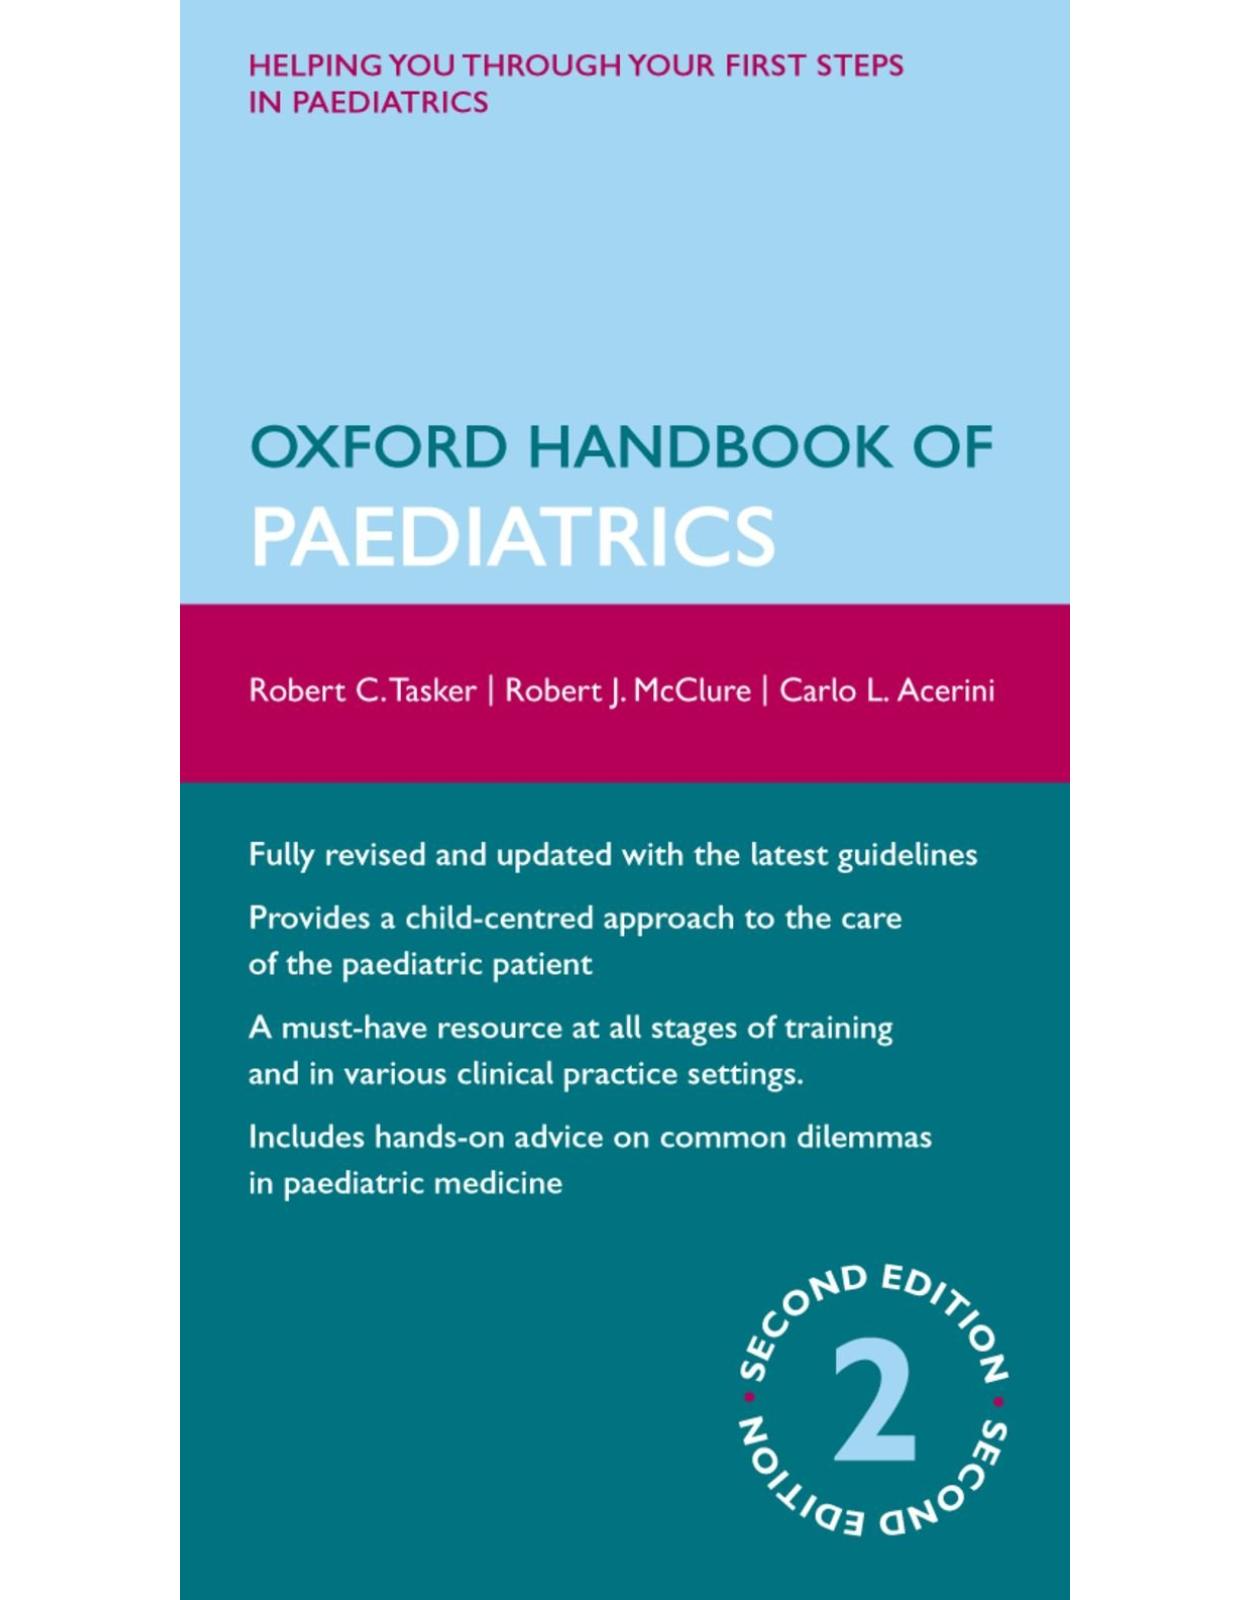 Oxford Handbook of Paediatrics 2e